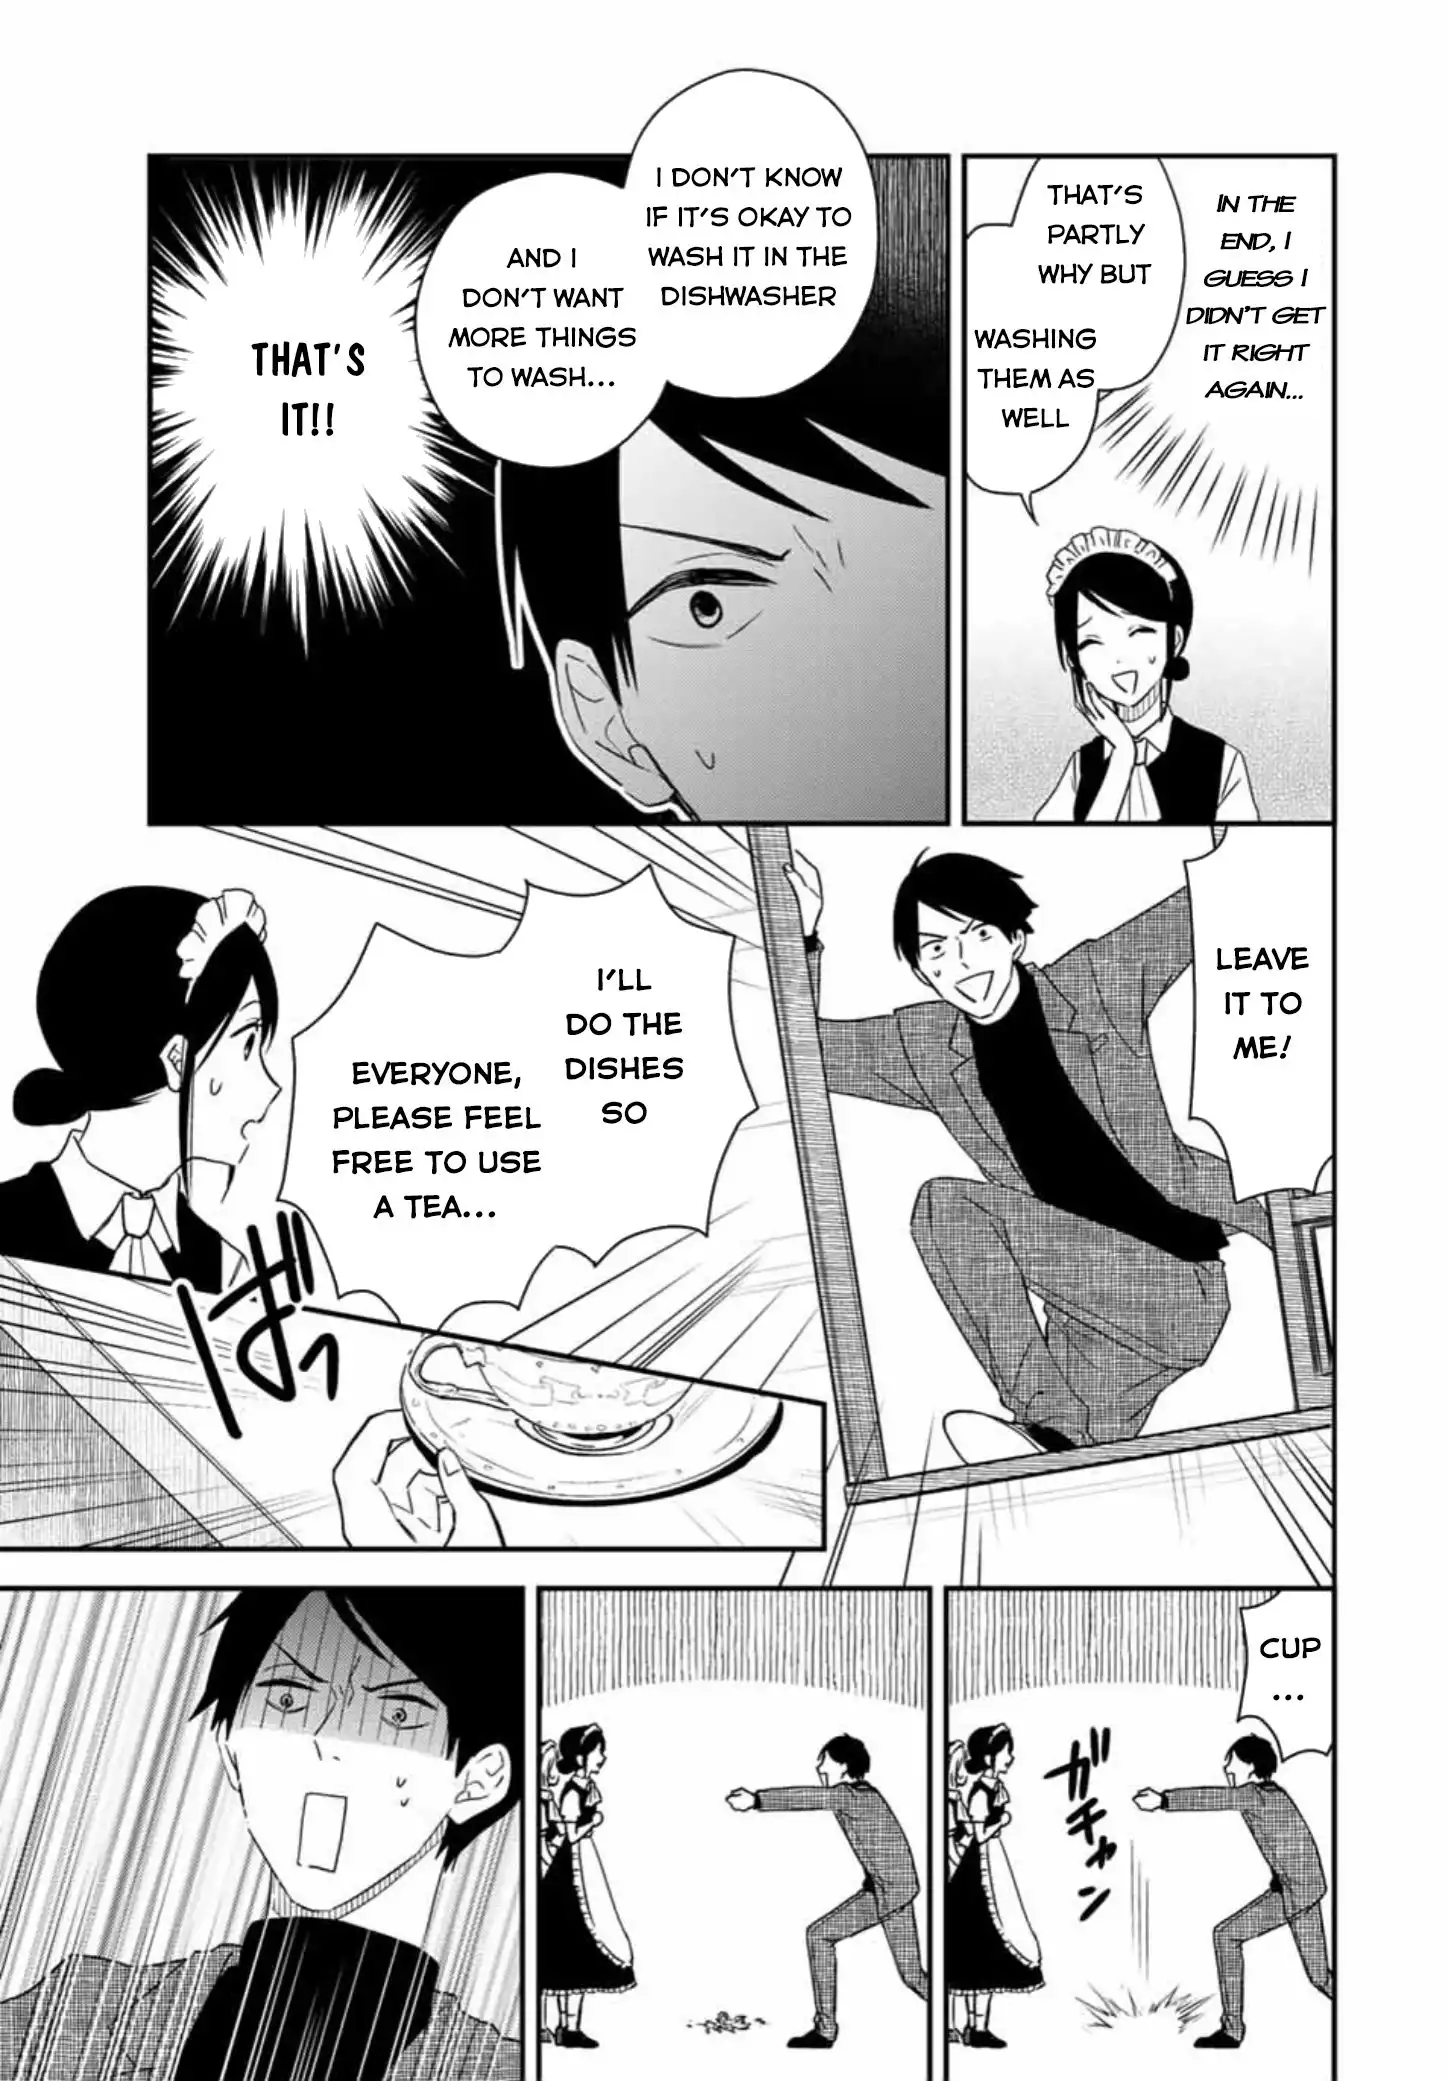 Maid no Kishi-san Chapter 29